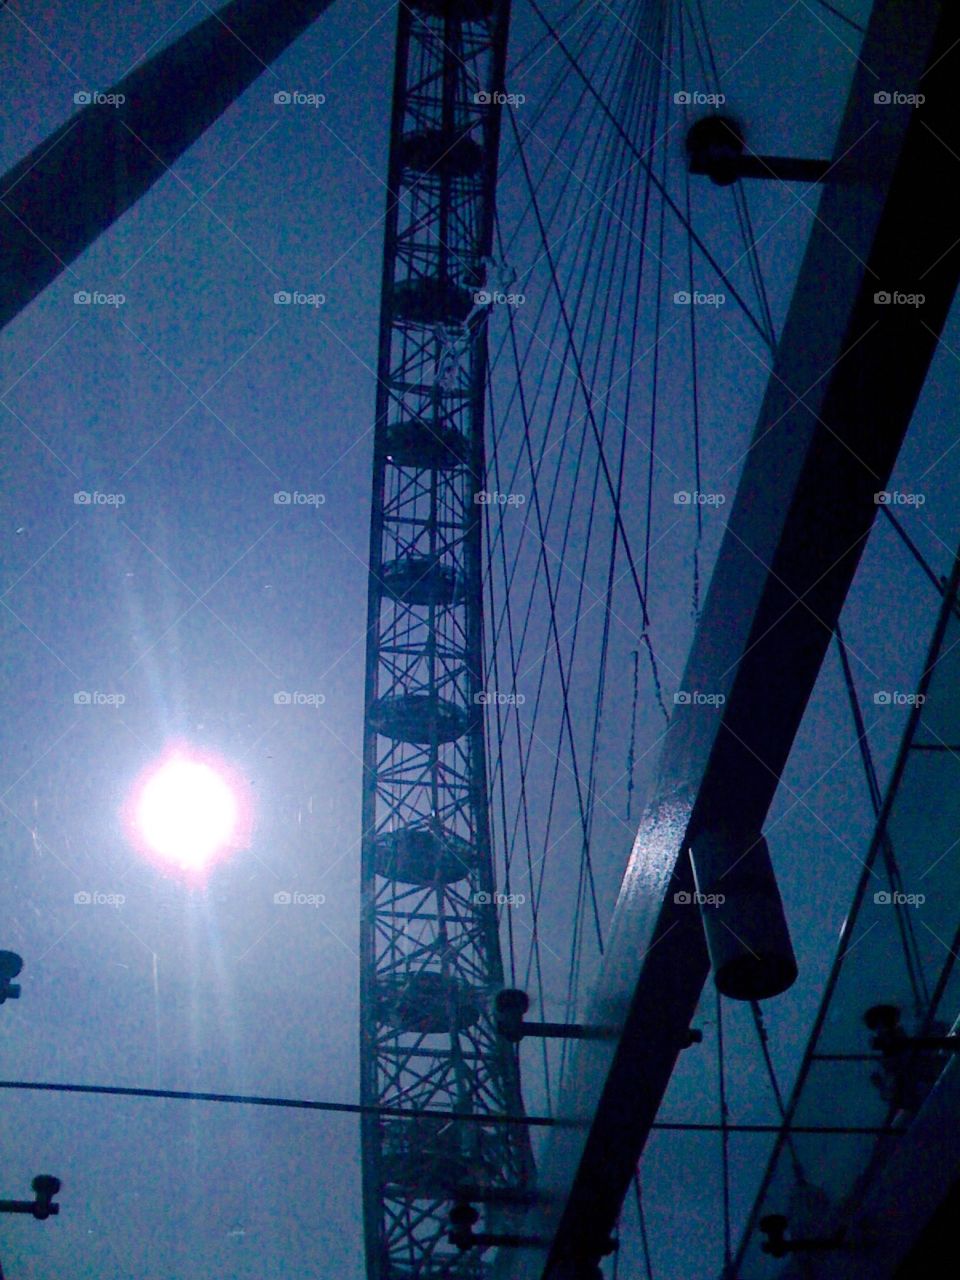 The London Eye. The sun shines on the London Eye